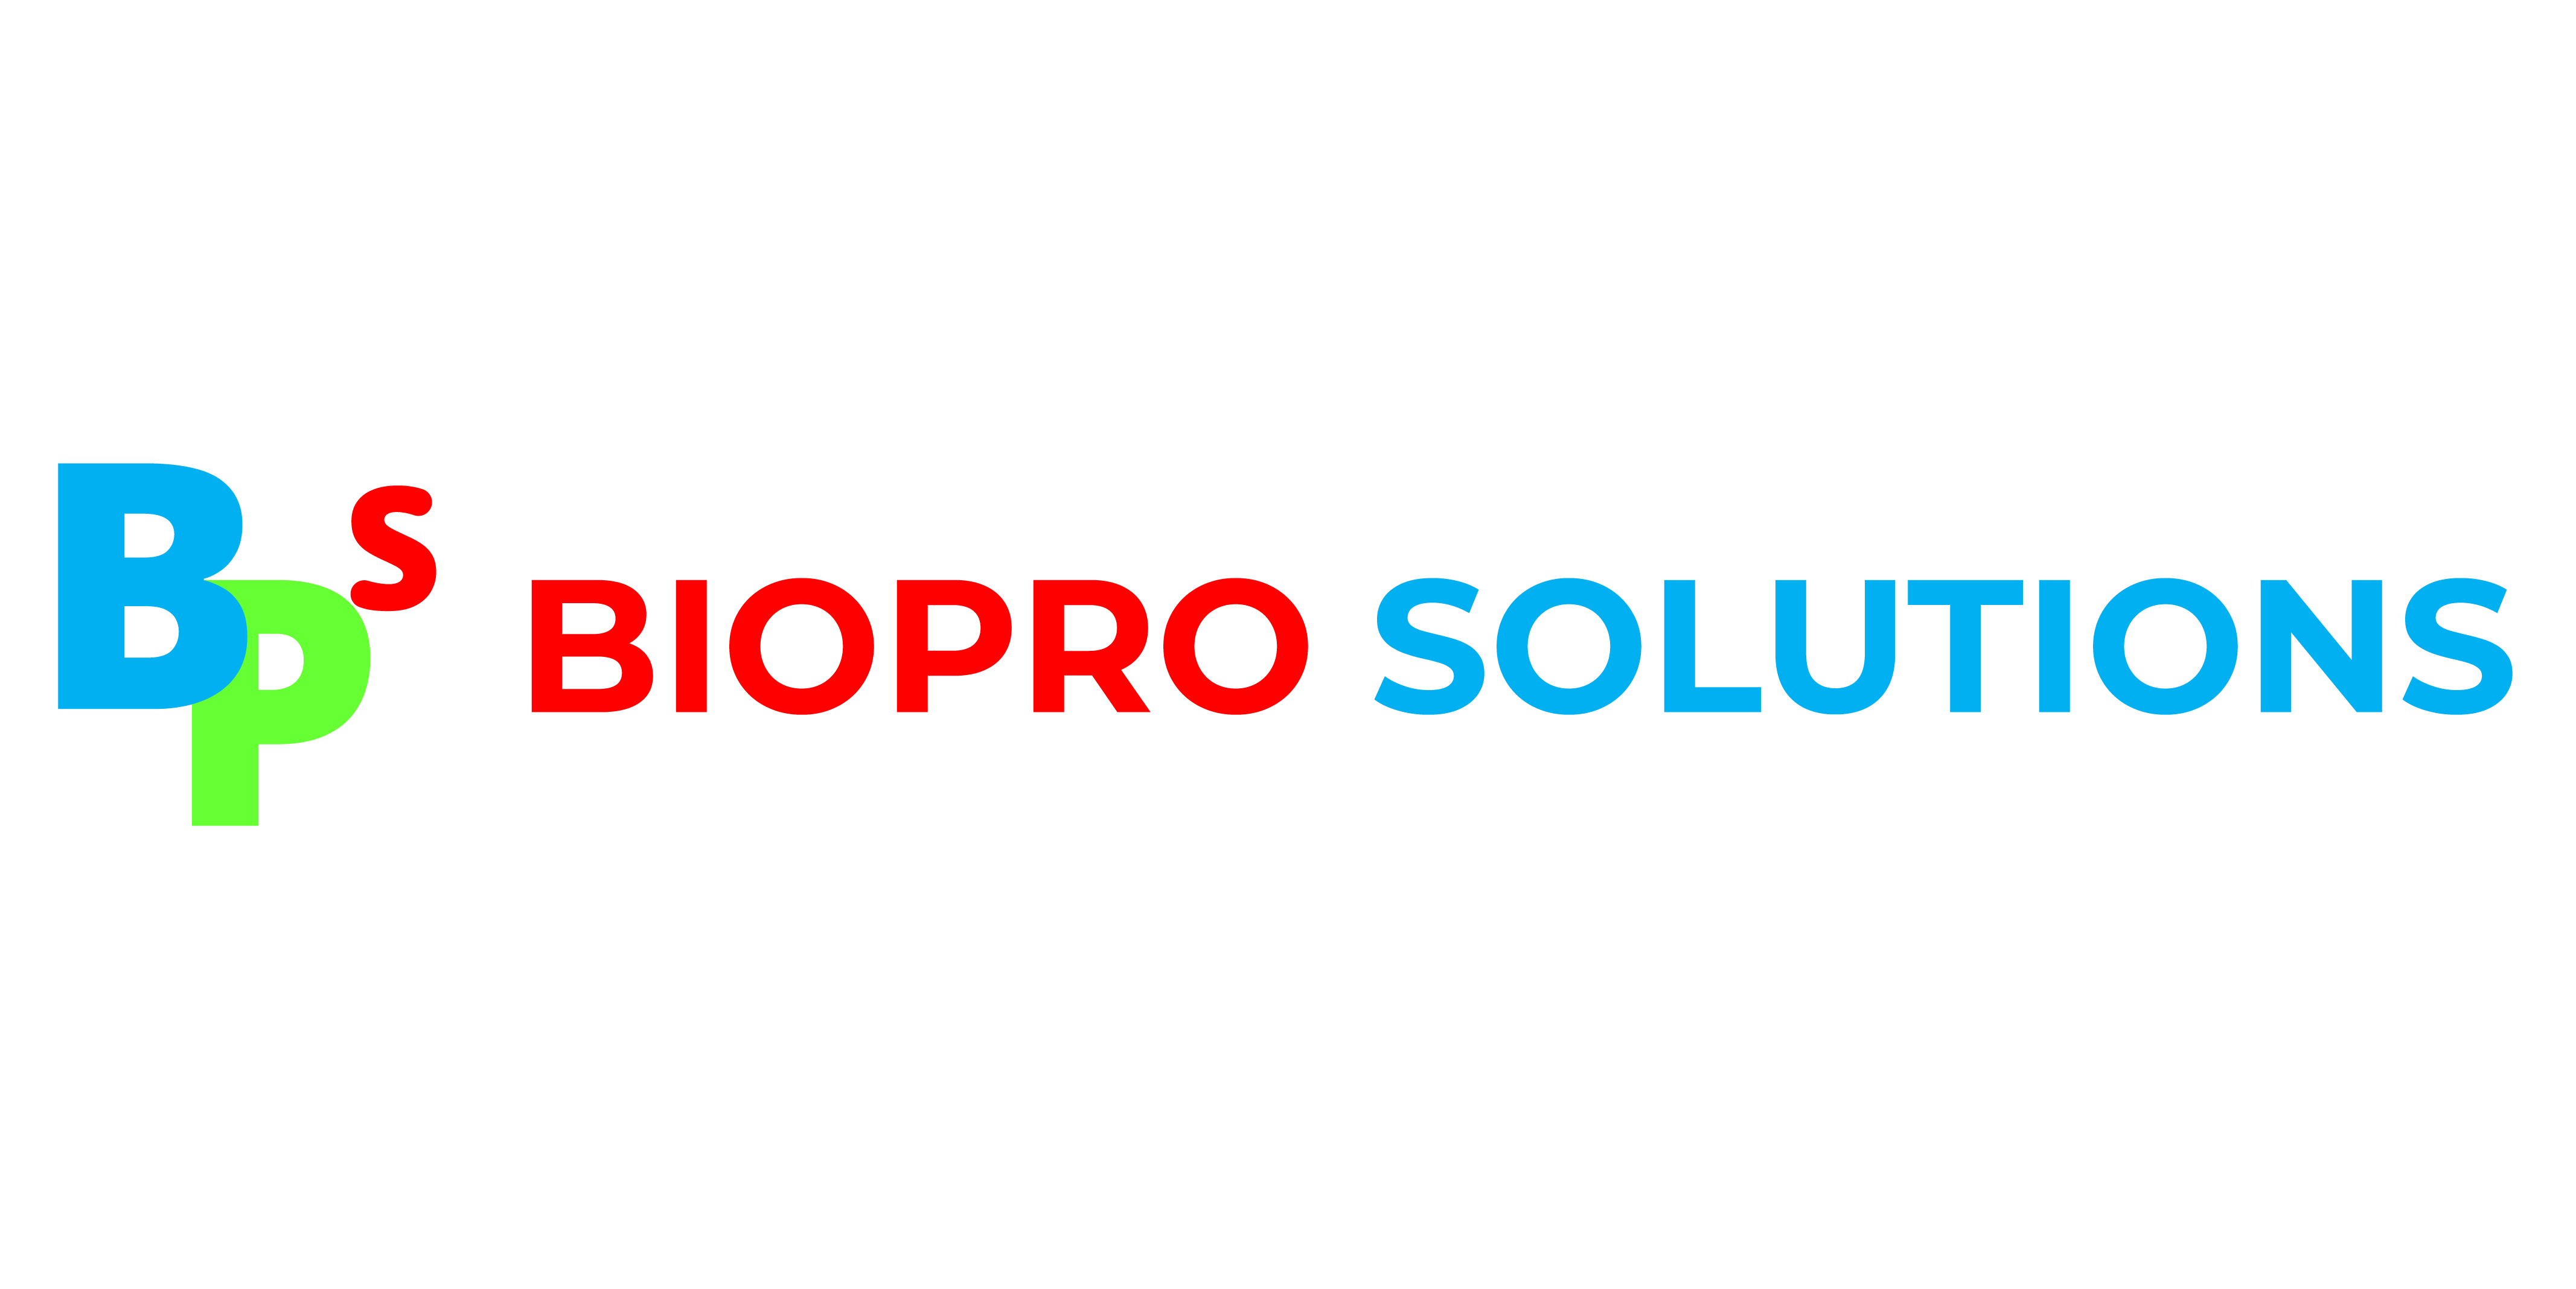 BIOPRO SOLUTIONS